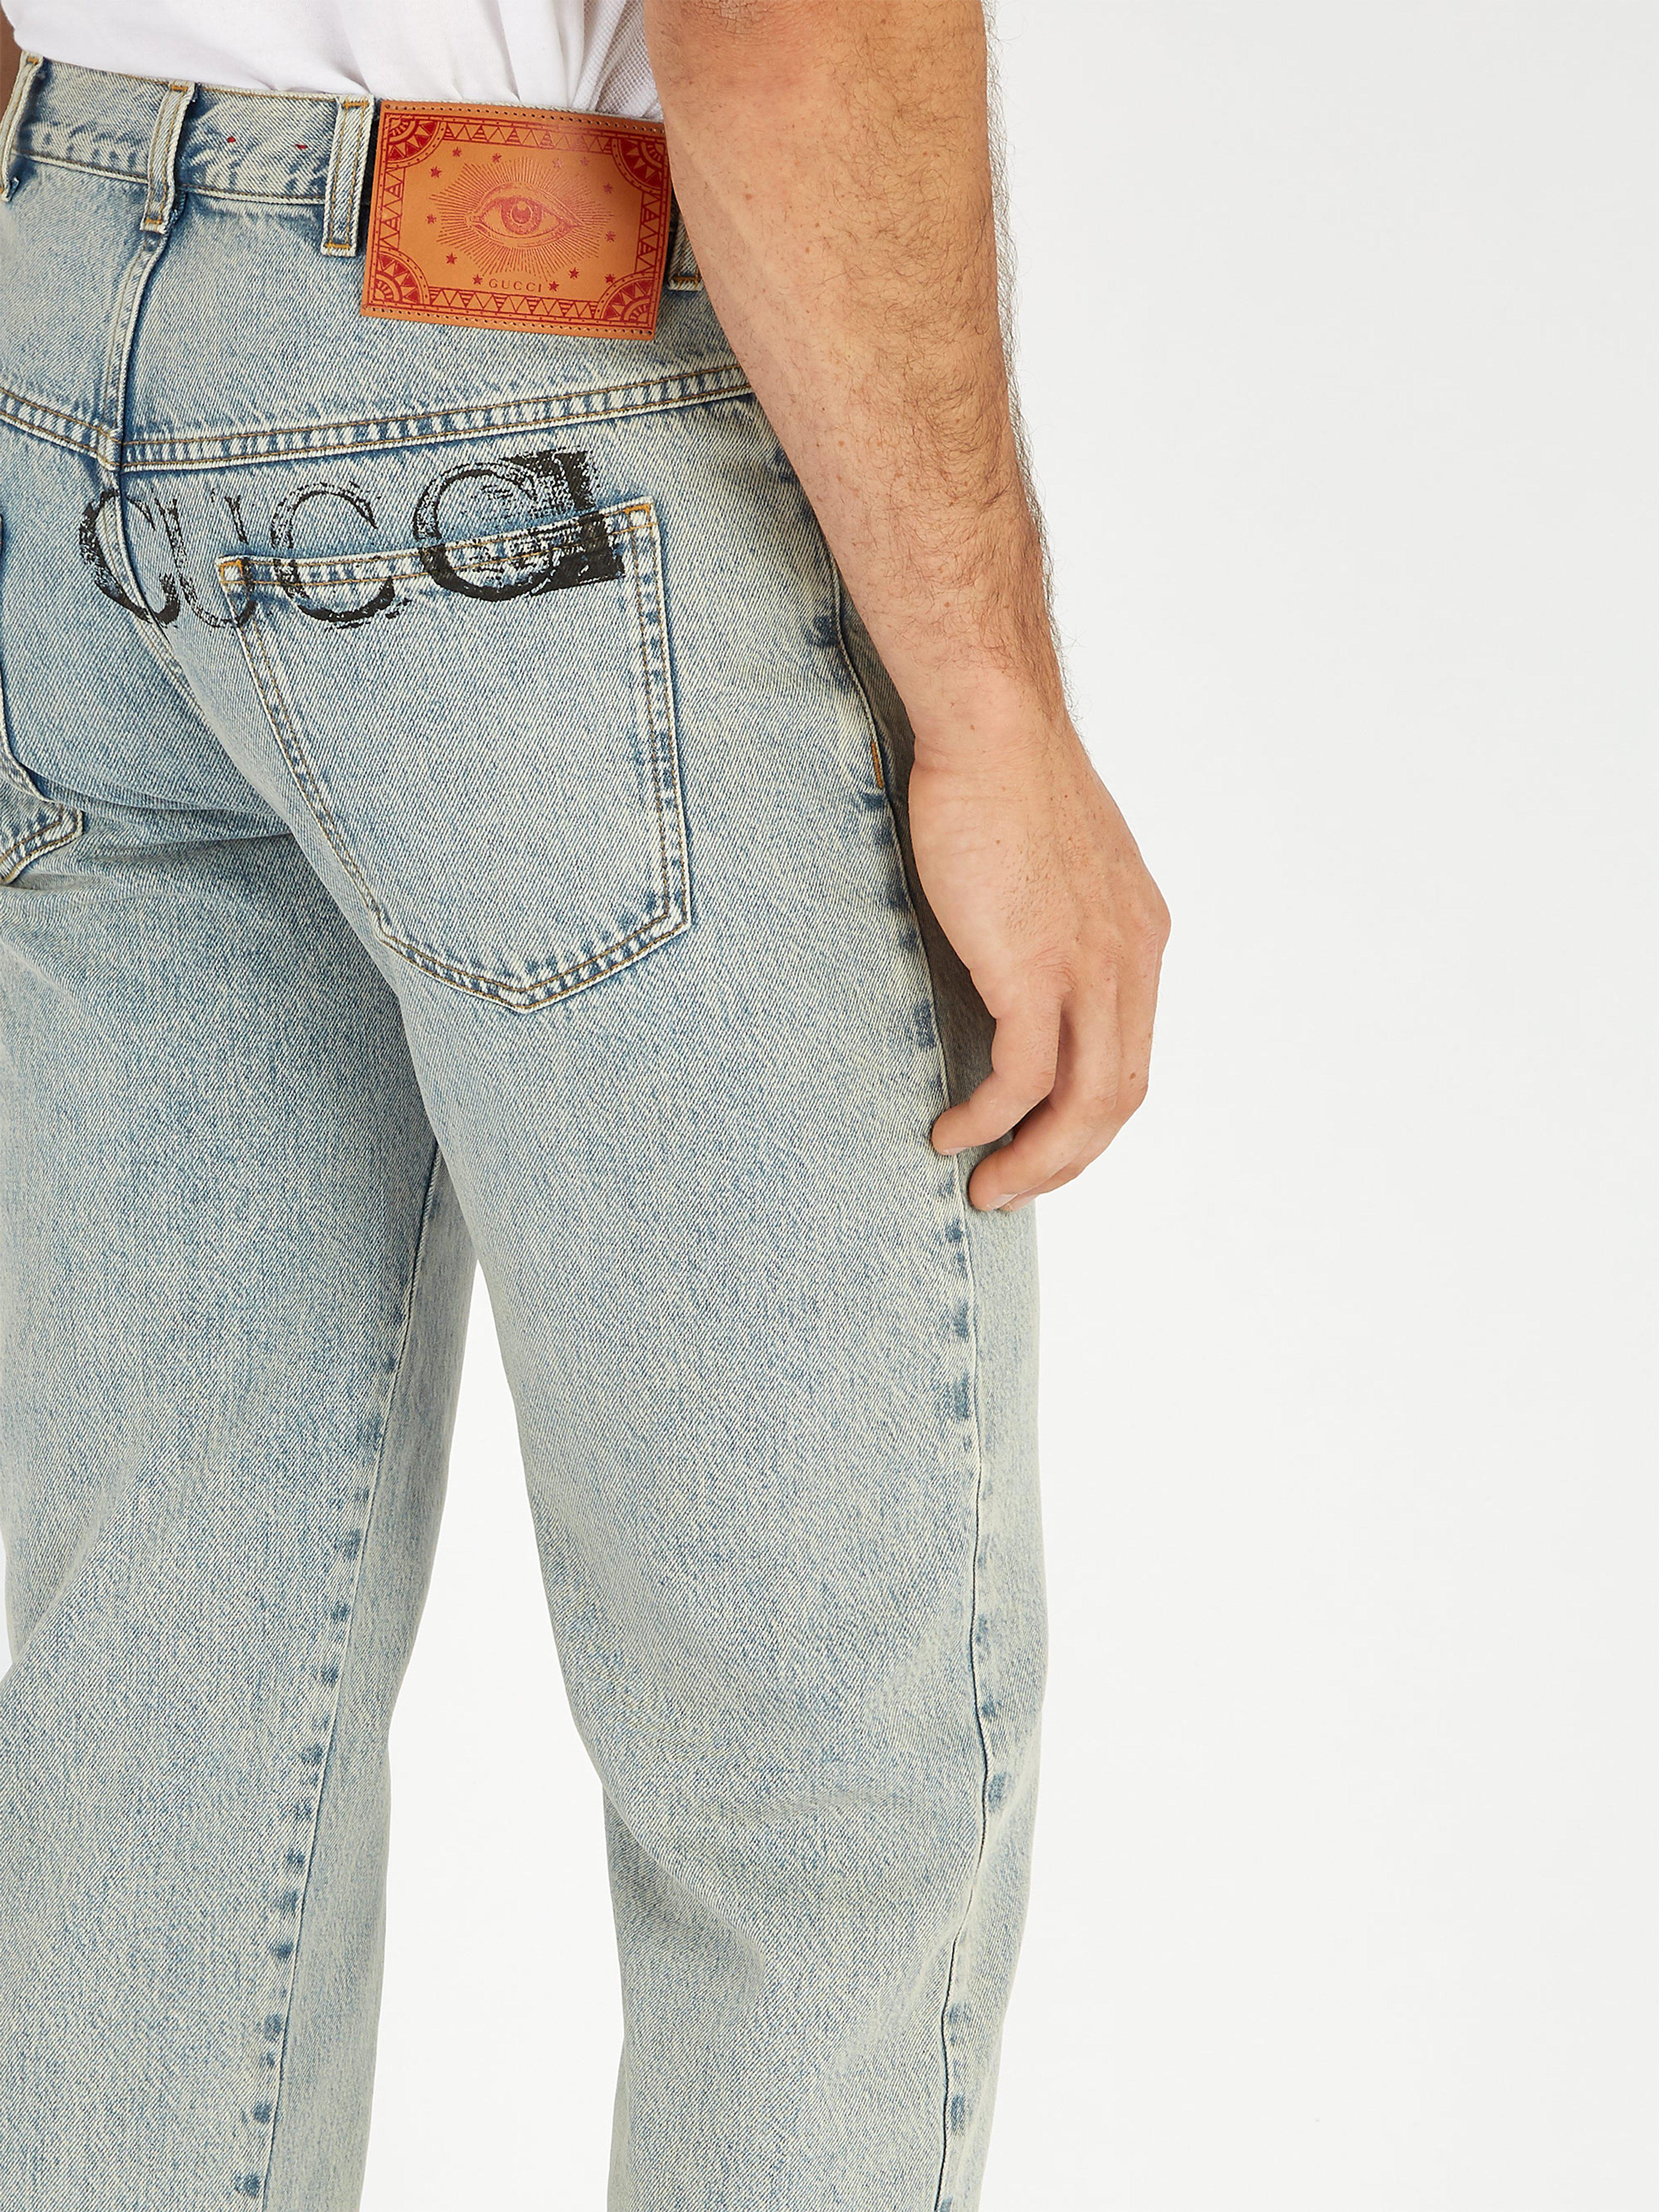 Gucci Denim Logo Print Straight Leg Jeans in Blue for Men - Lyst